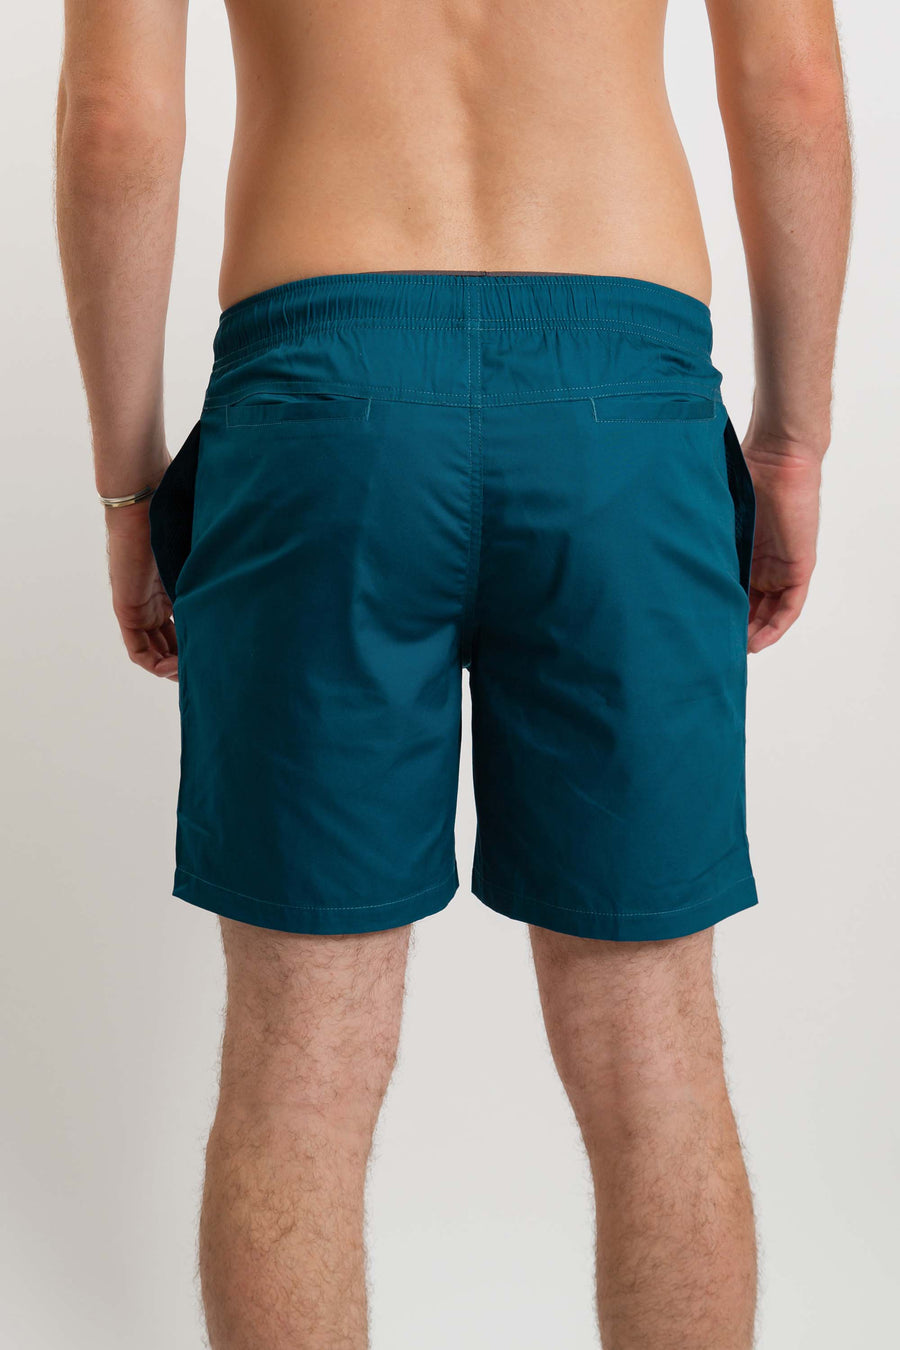 Pro Label 17" Beach Shorts - Atlantic